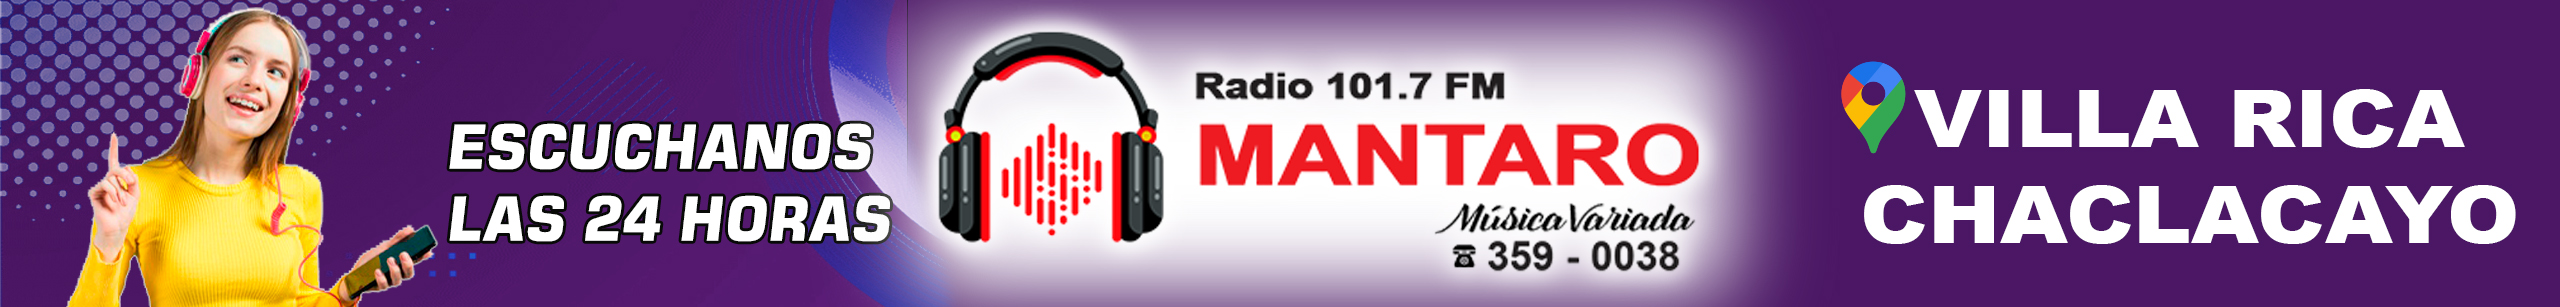 Radio Mantaro 101.7 FM